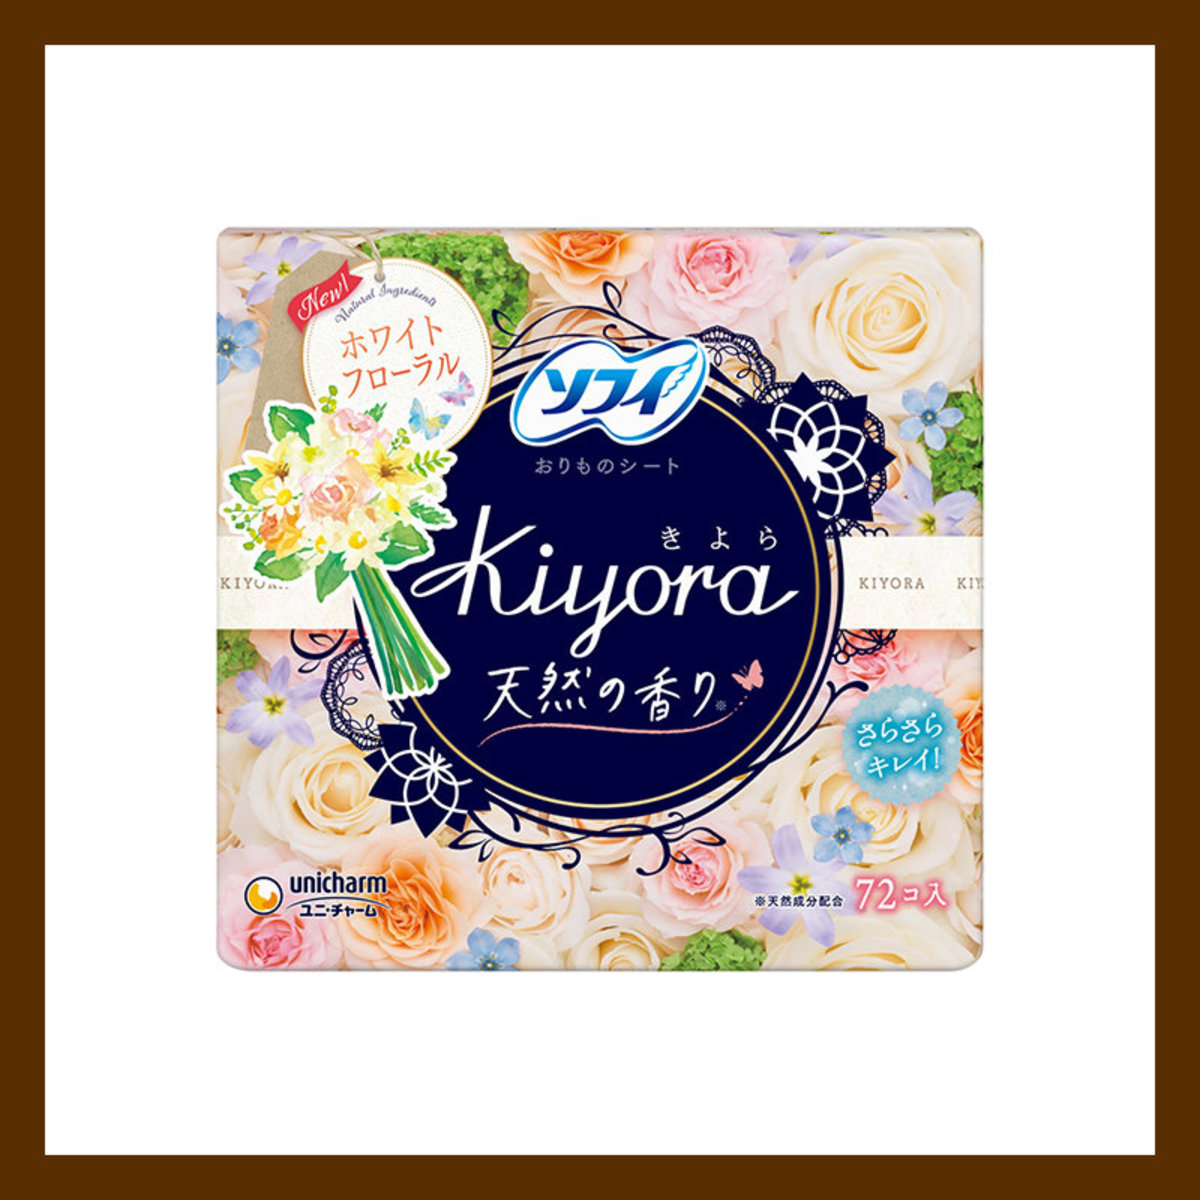 Kiyora Pantiliner (Happy Floral) 72pcs 4903111330997 (Randomly Delivery)